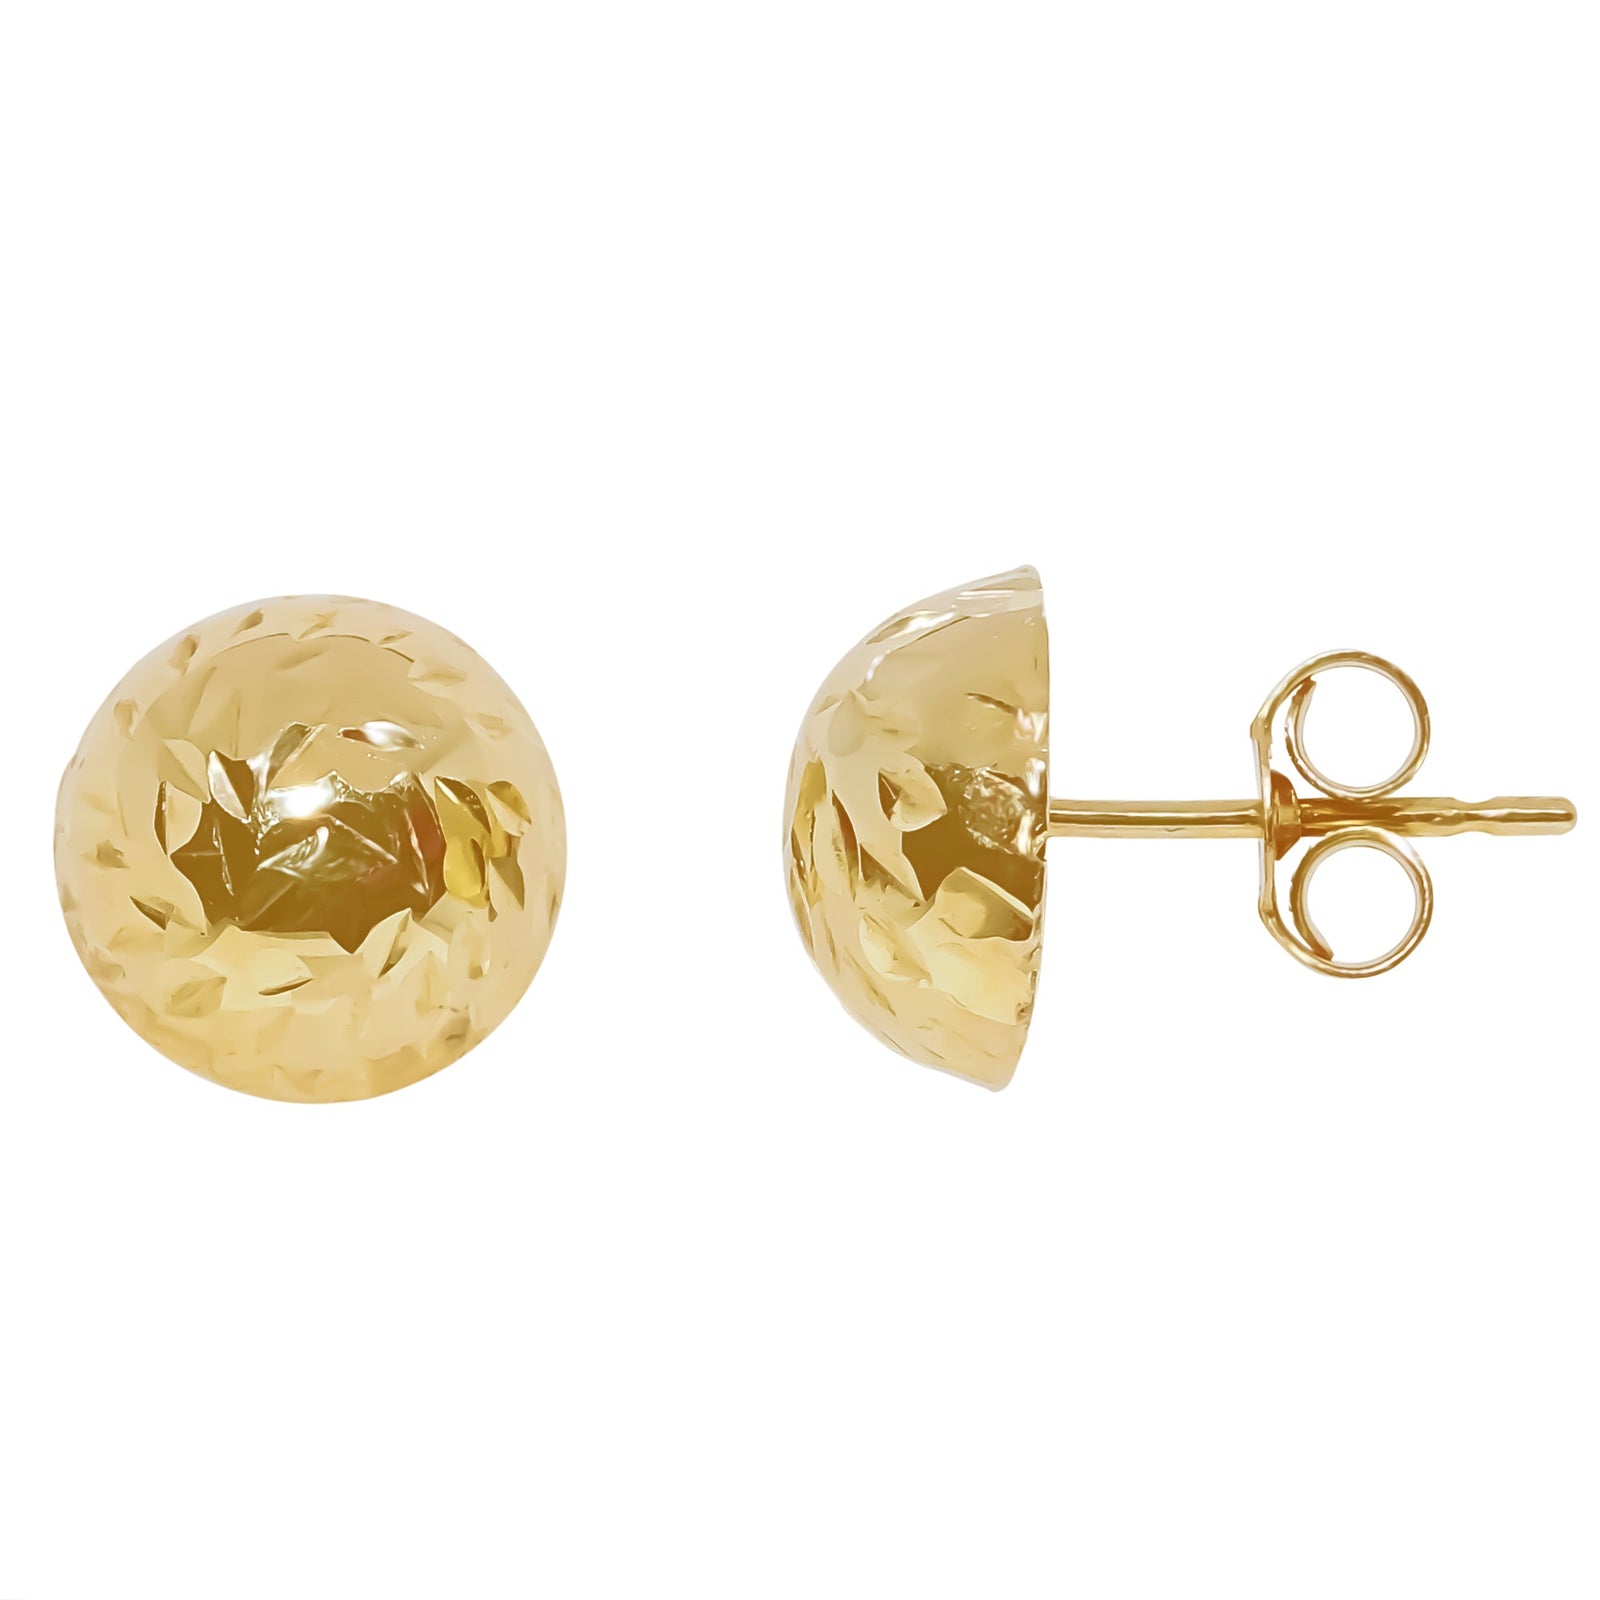 9ct gold 9mm diamond cut dome stud earrings